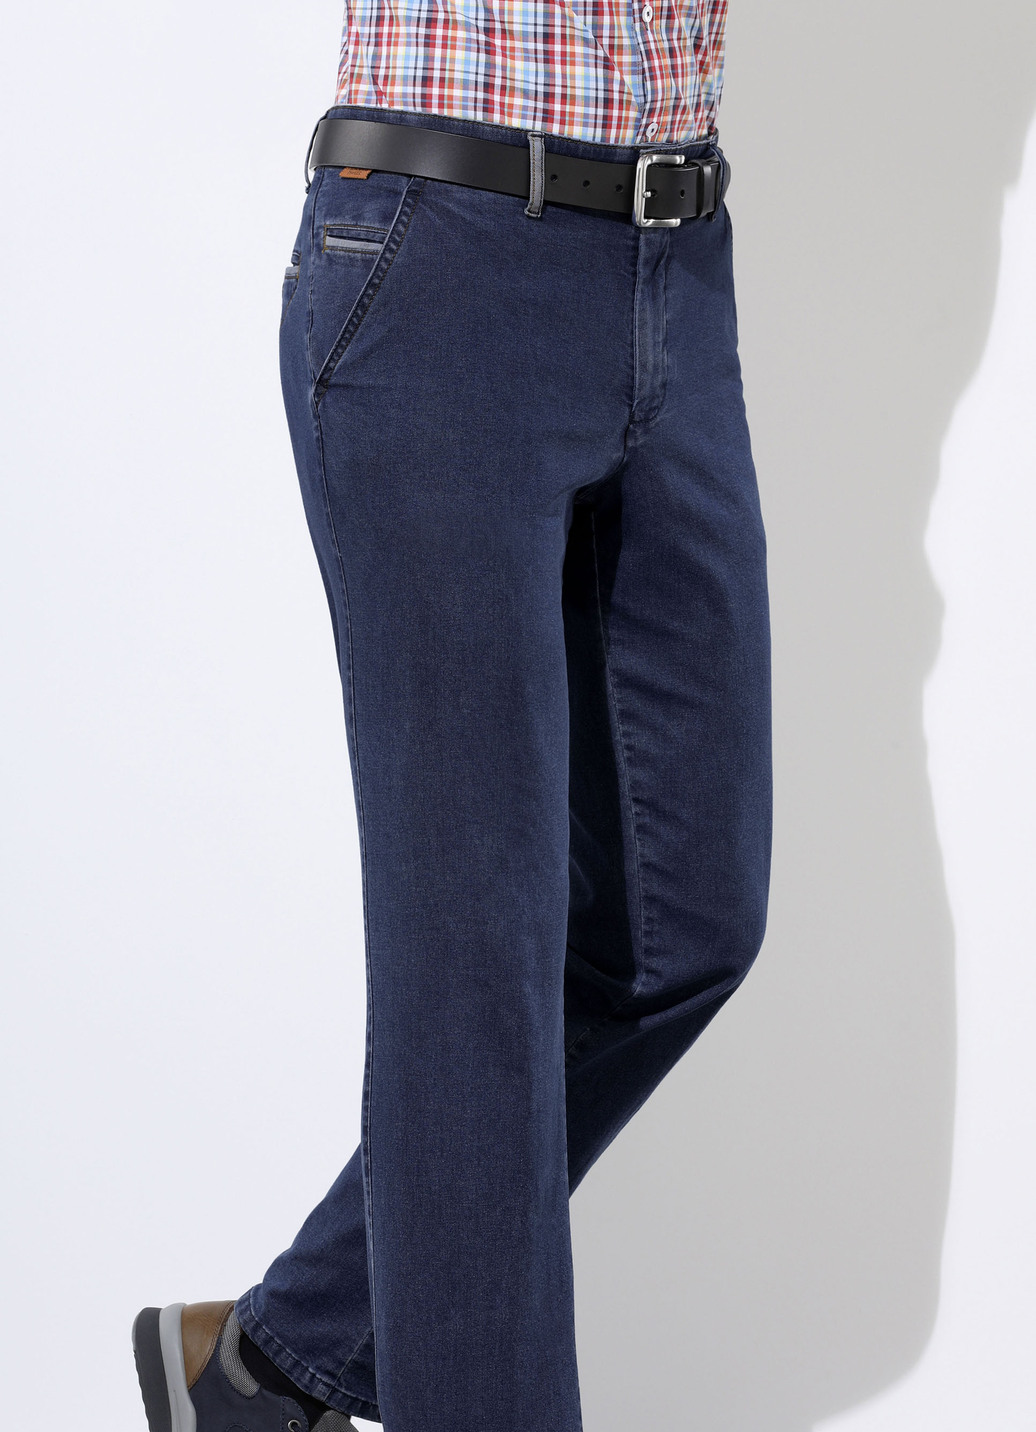 "Francesco Botti"-Jeans in 3 Farben, Dunkelblau, Größe 60 von FRANCESCO BOTTI